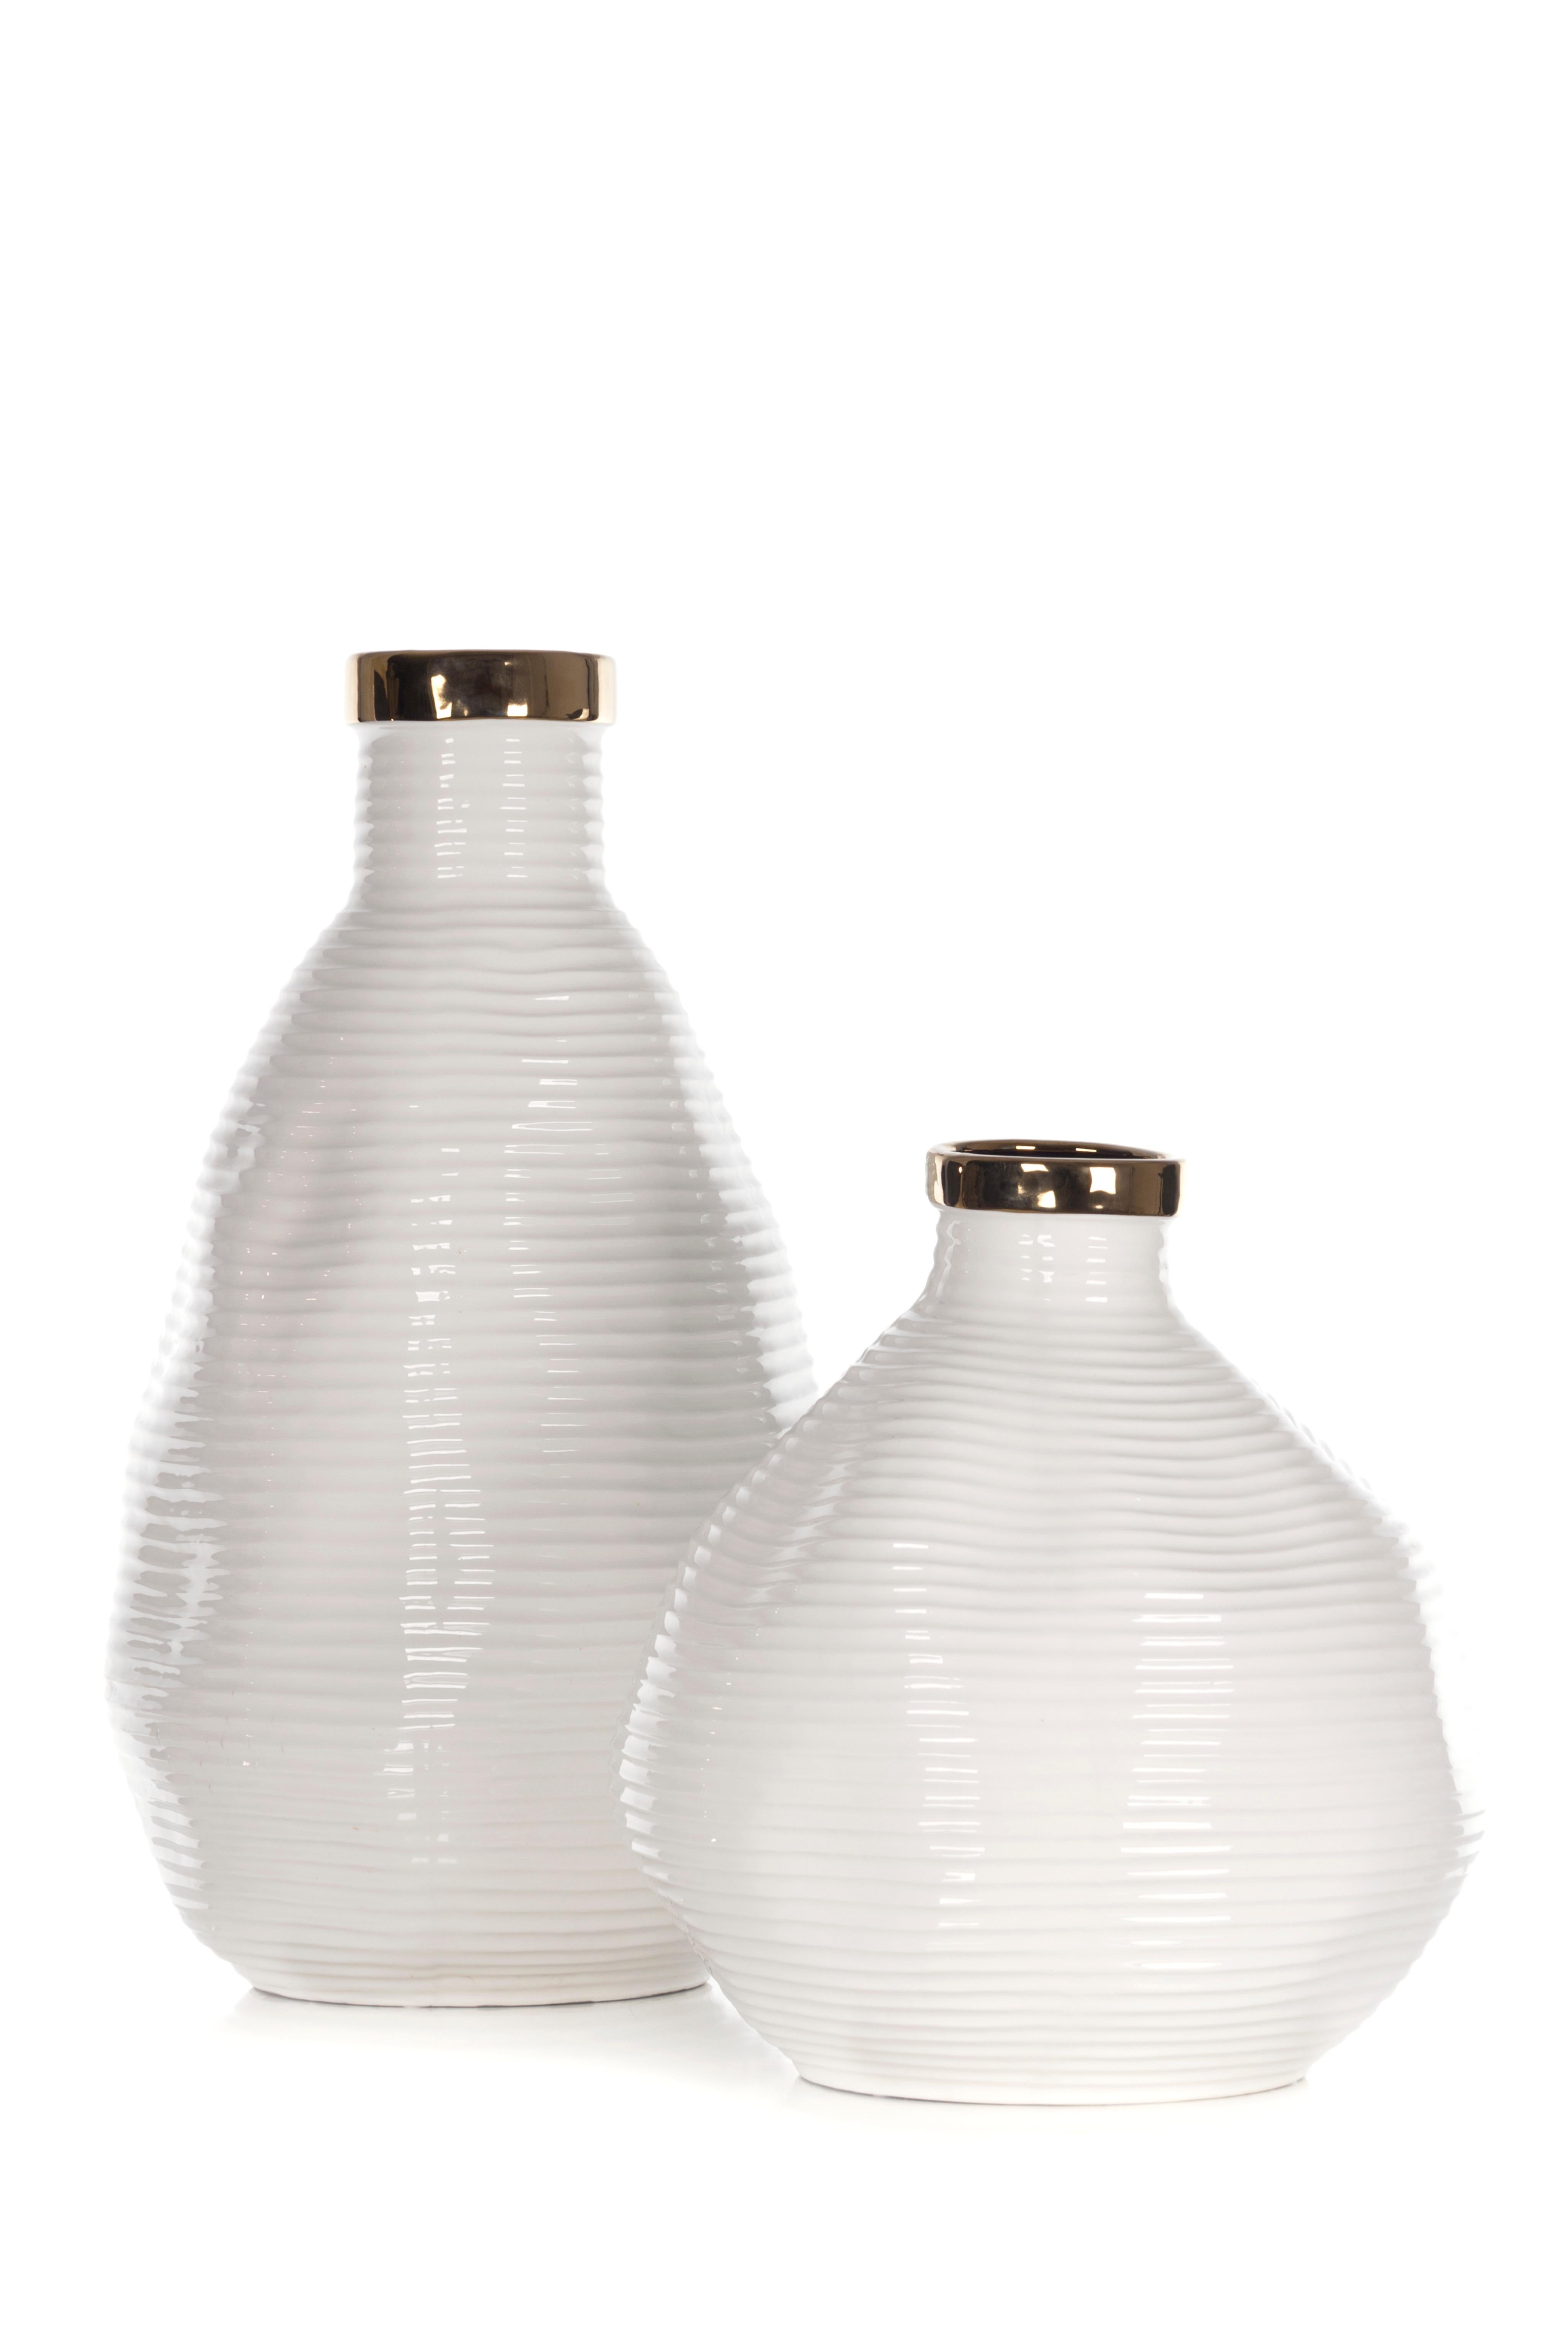 Portuguese Set/2 Ceramic Vases, White, Handmade in Portugal by Lusitanus Home For Sale